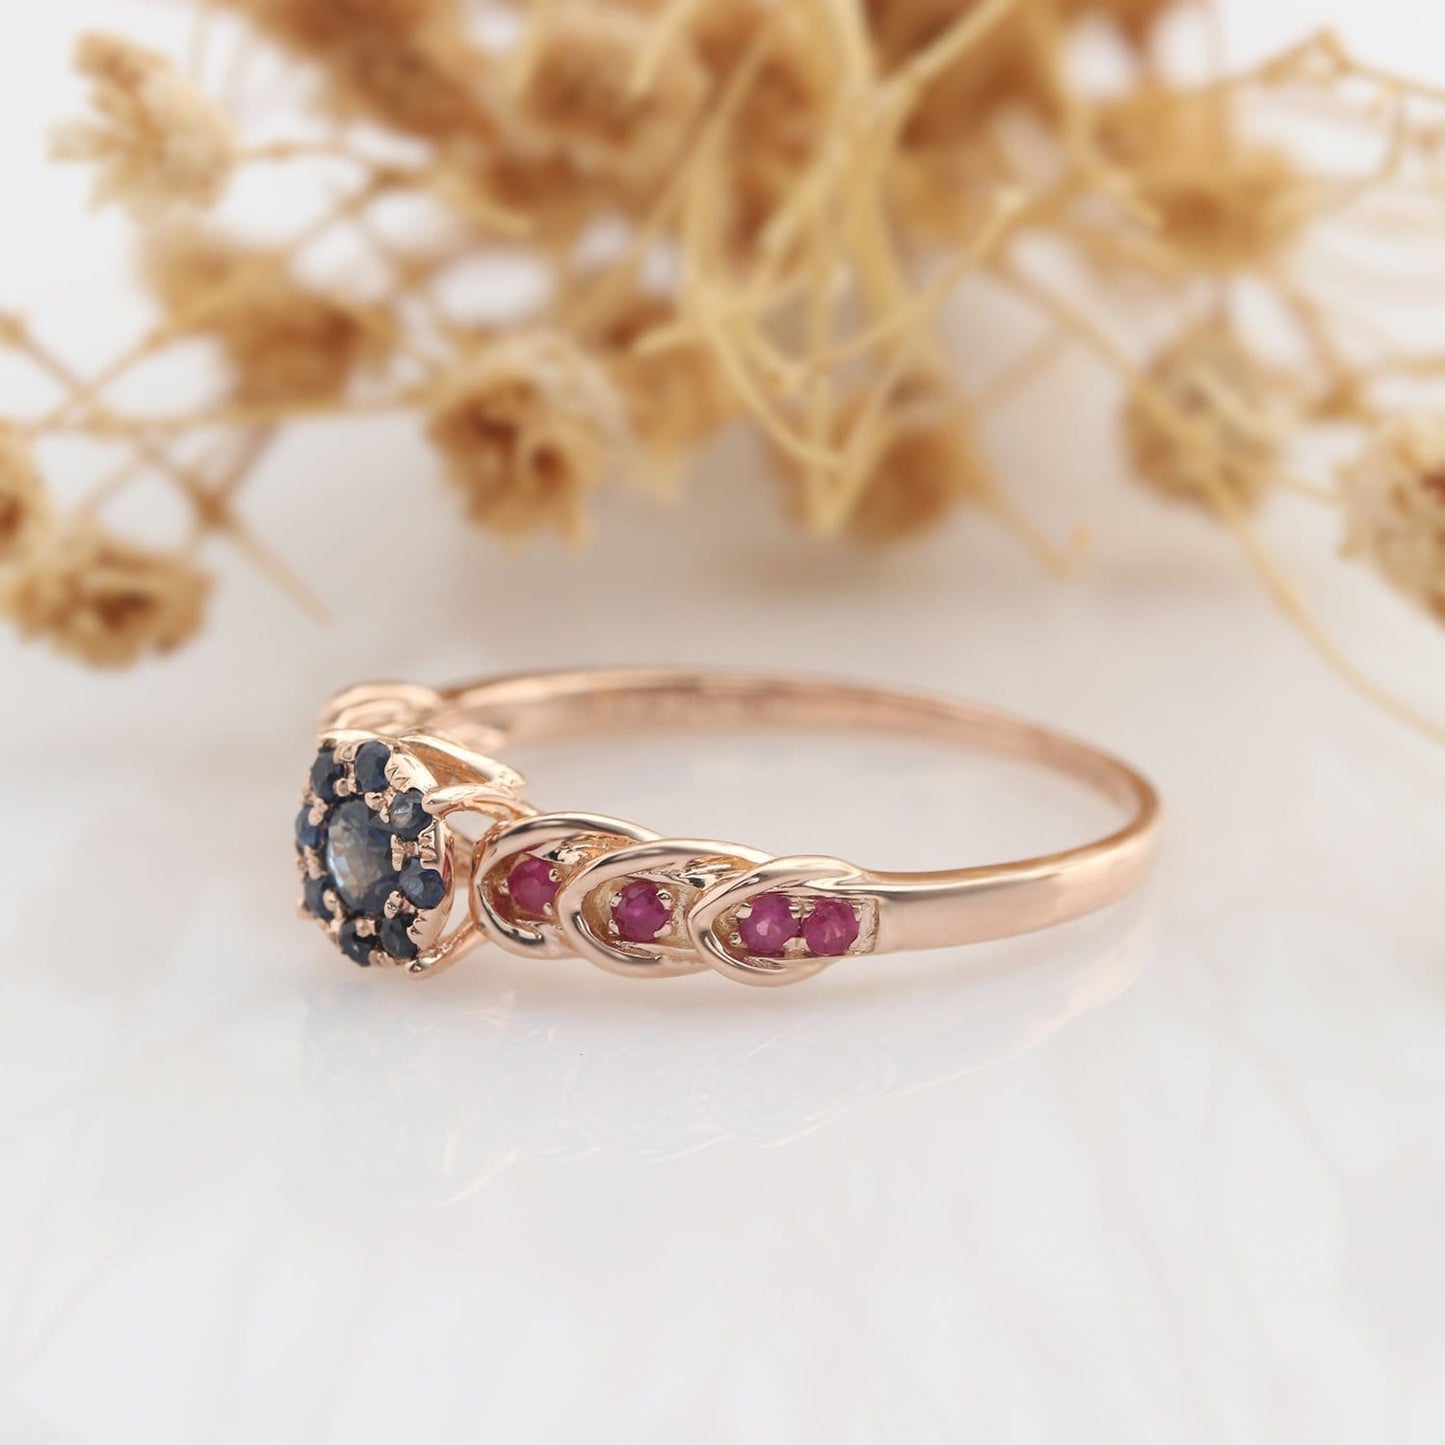 Natural Blue Sapphire Ring, Ruby Gemstone Ring, Vintage Filigree Ring